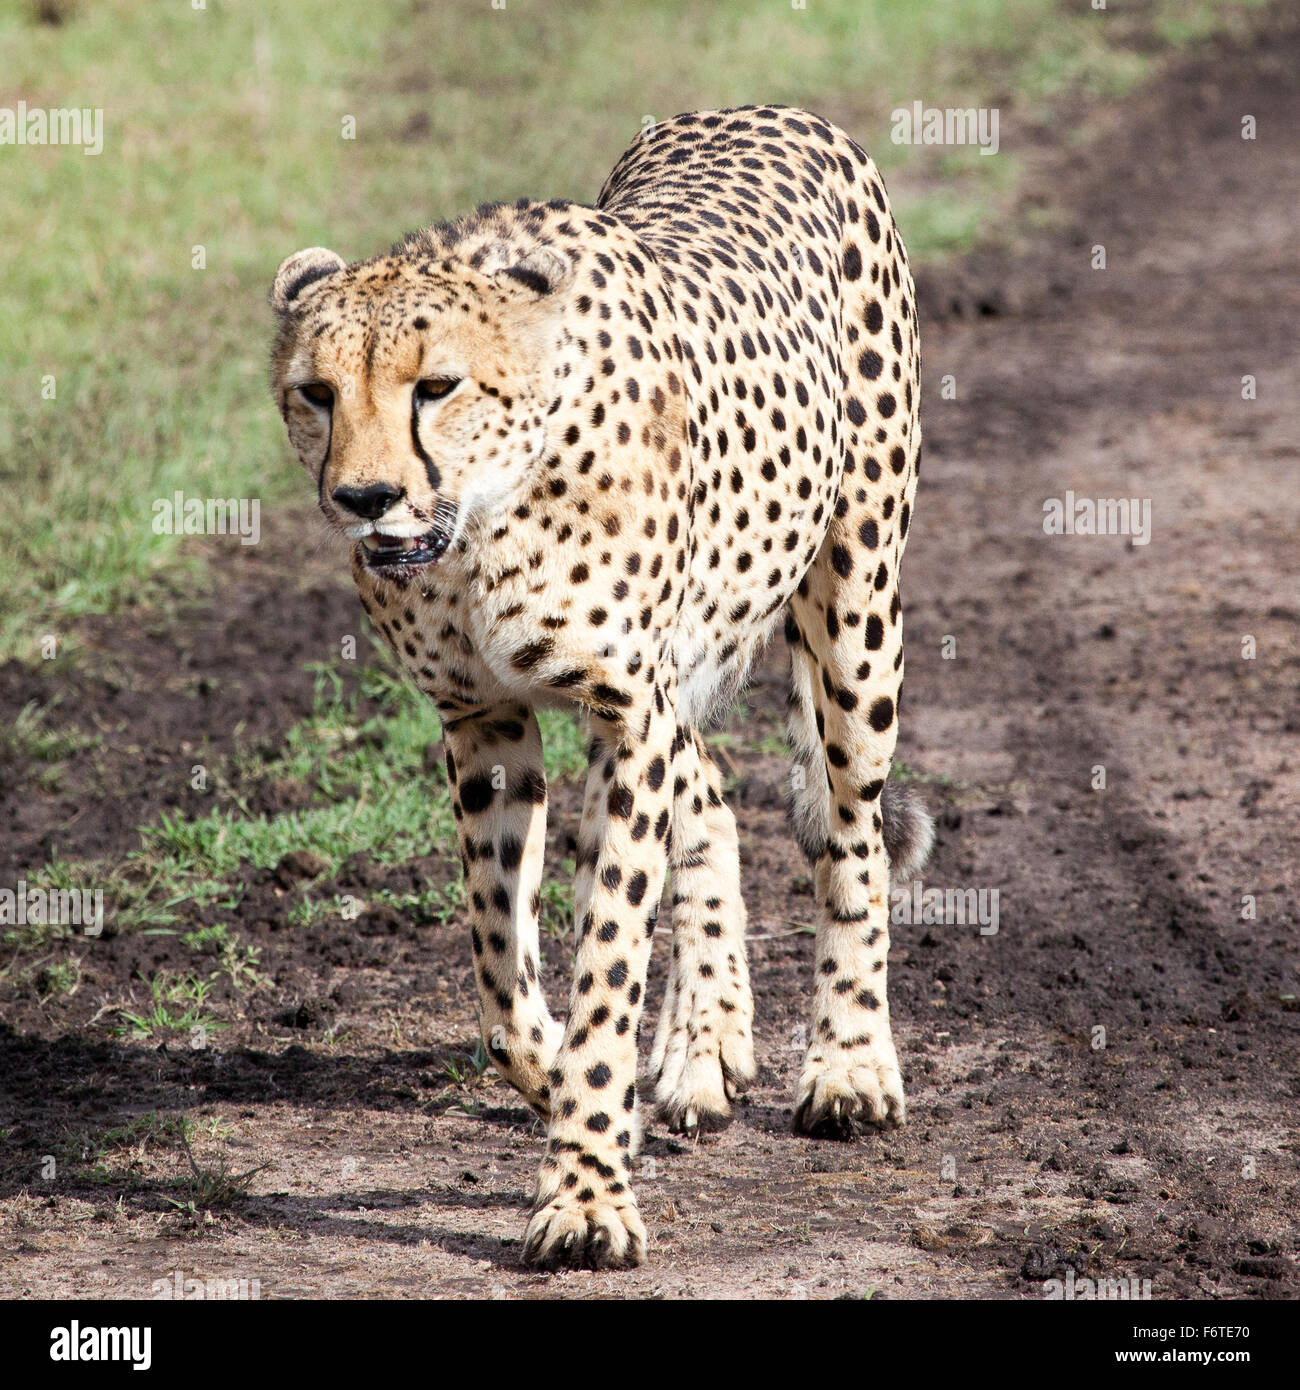 Cheetah walking in The Serengeti National Park, Tanzania, Africa Banque D'Images